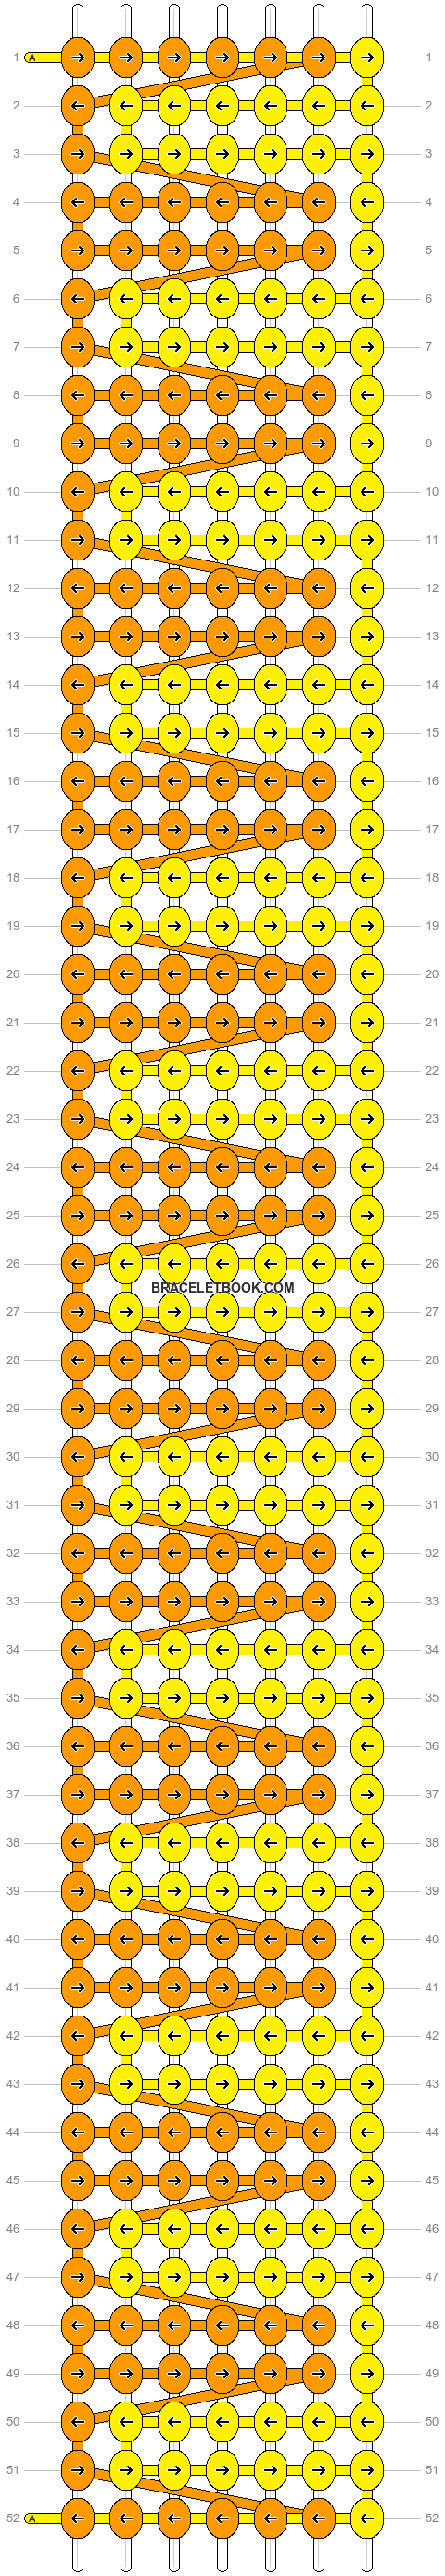 Alpha pattern #15234 variation #12559 pattern